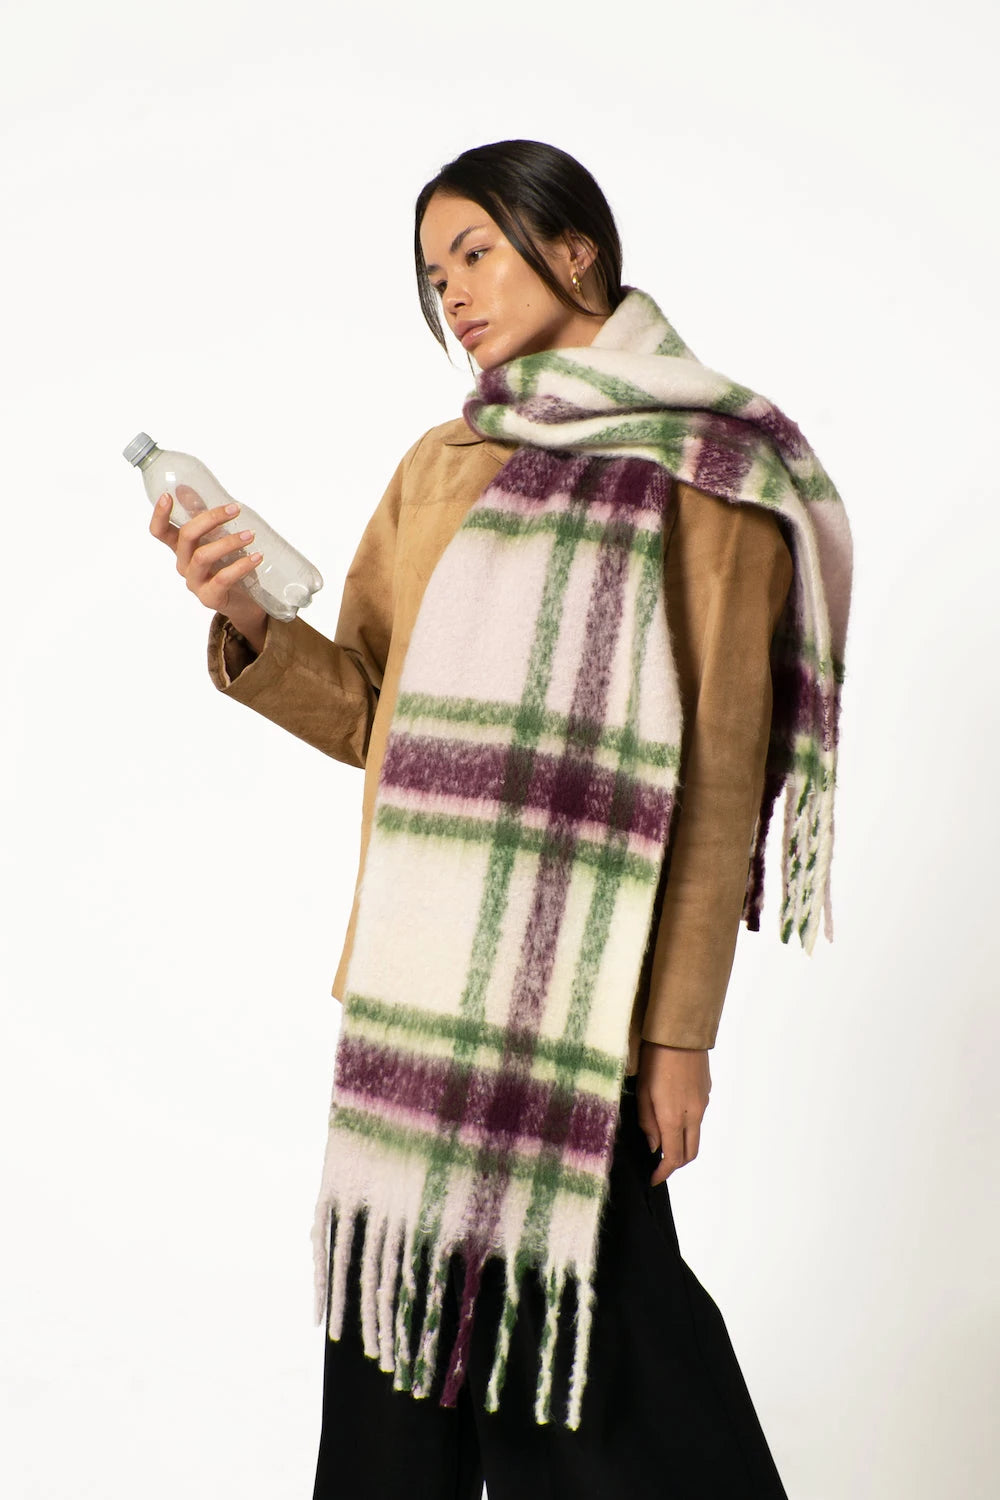 woman wearing oversized tasselled scarf, holding a plastic bottle